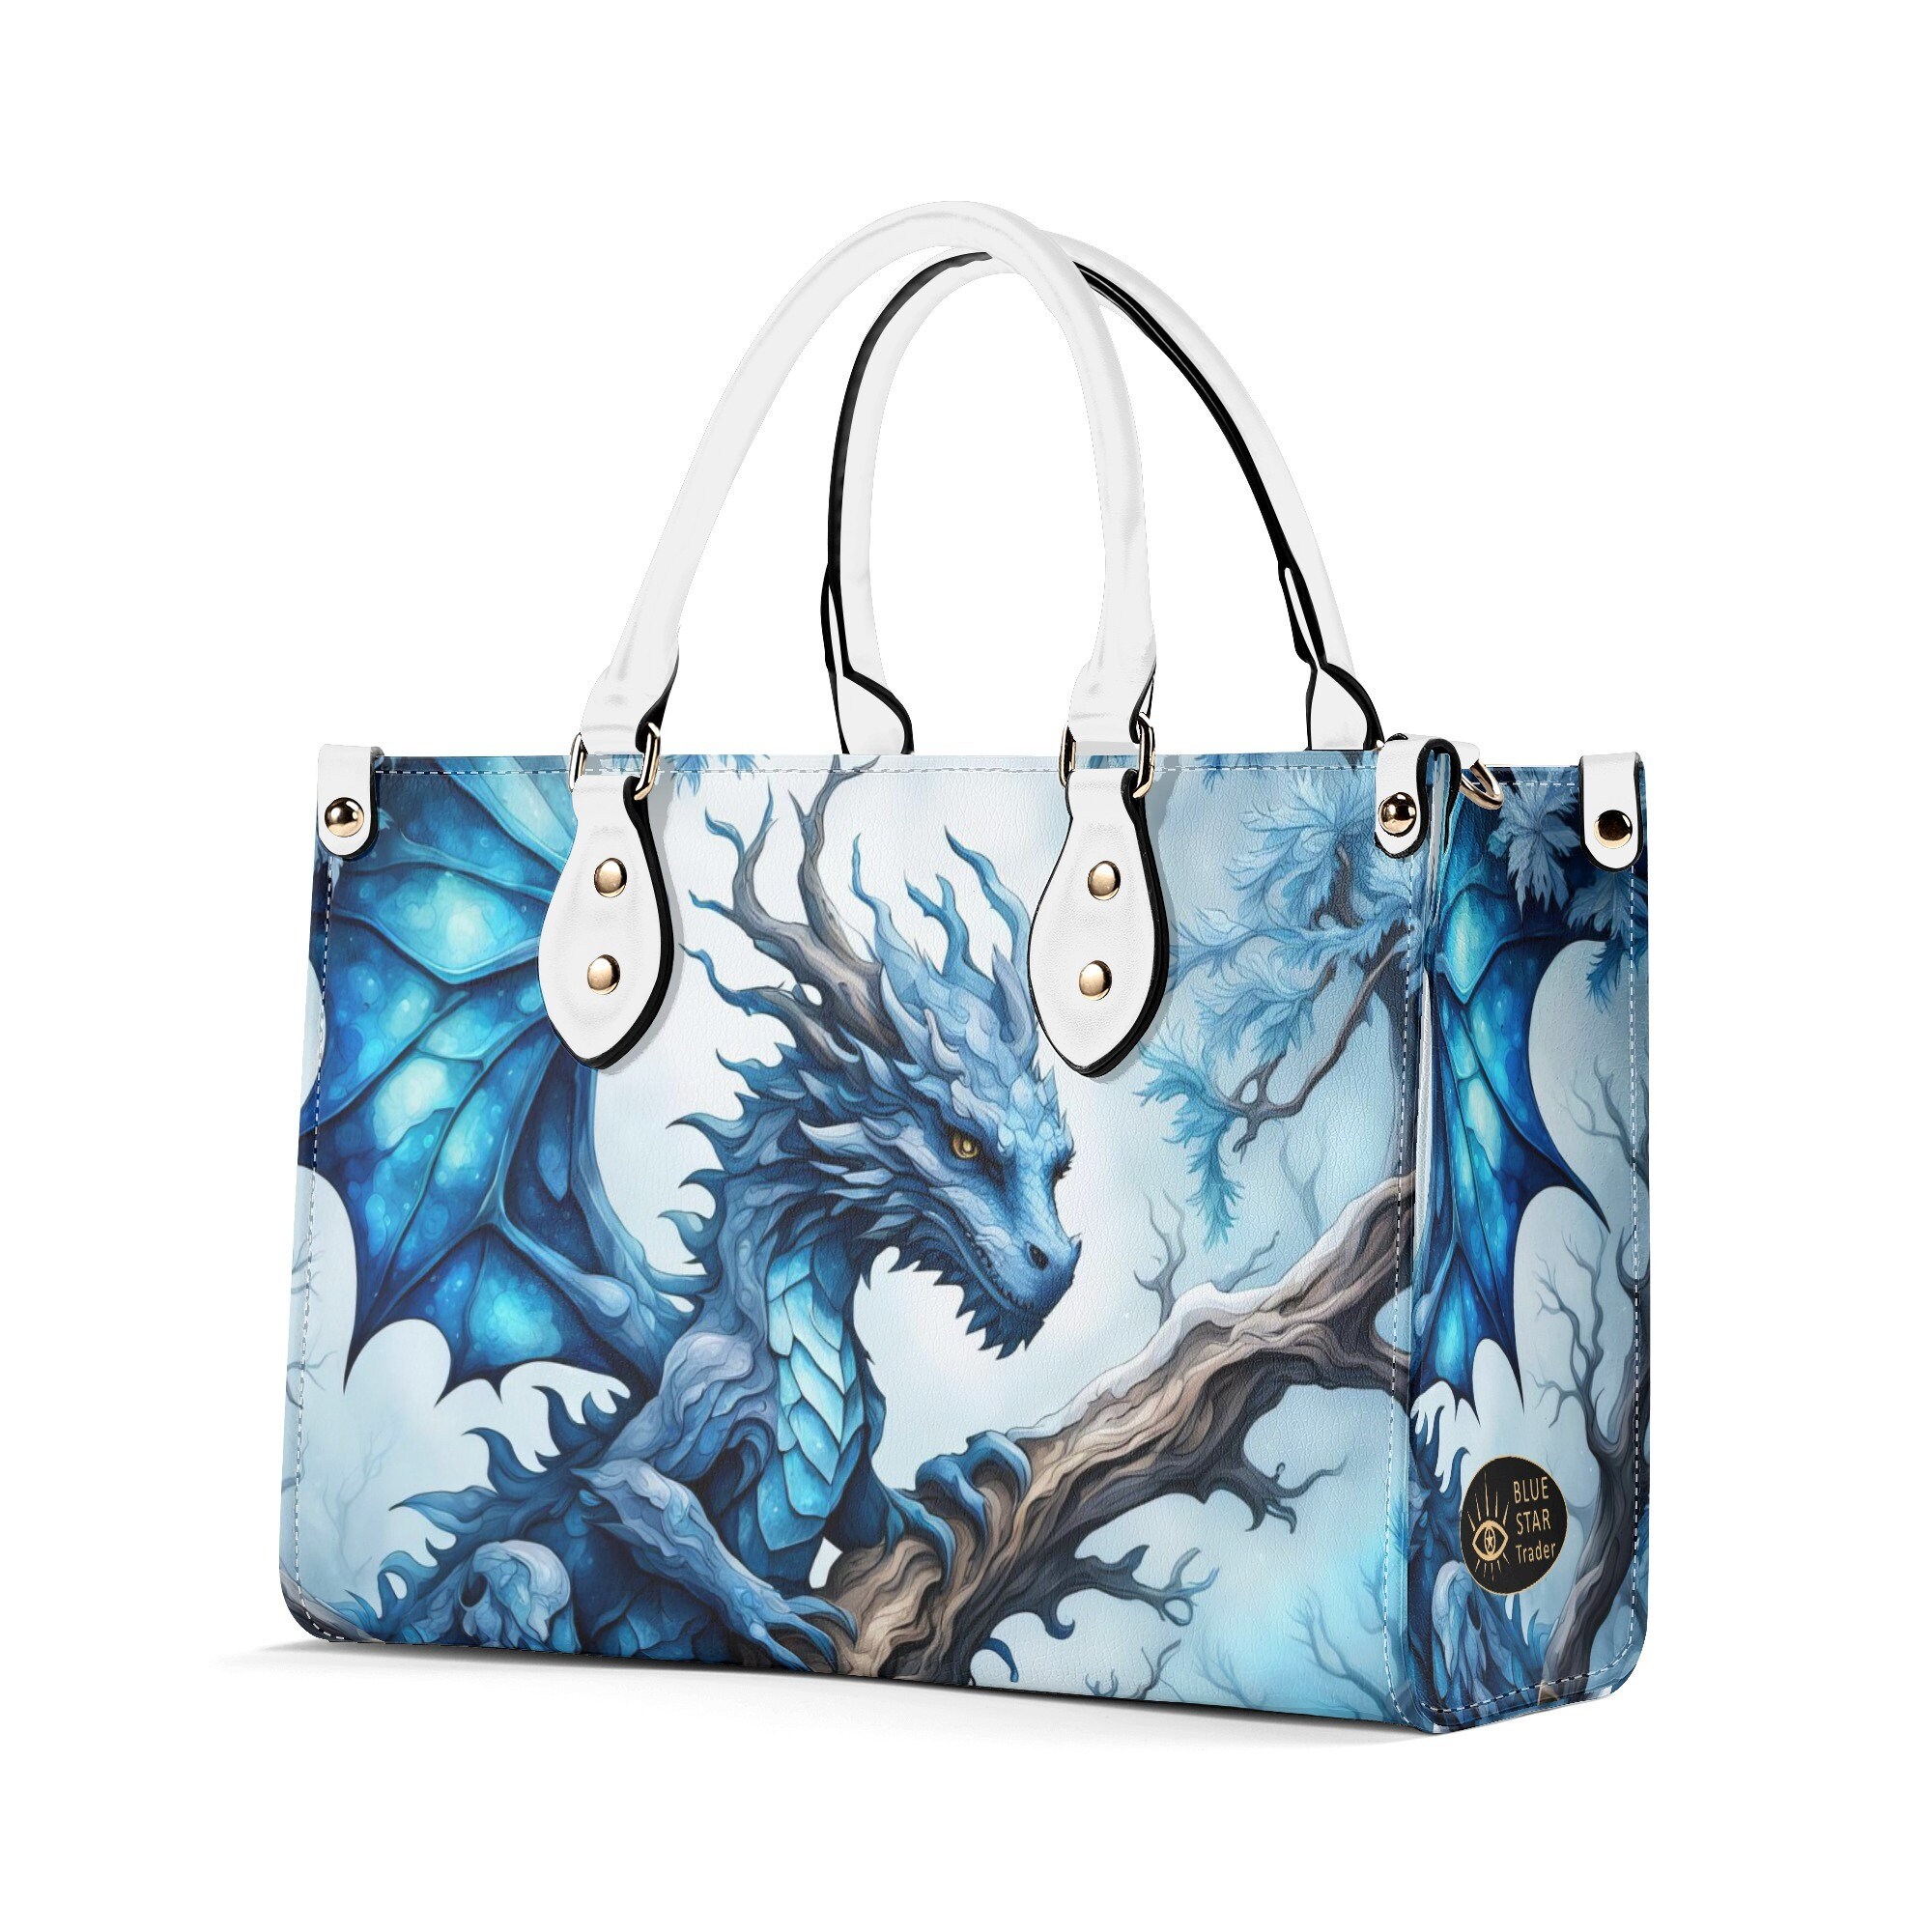 Blue Ice Dragon Handbag Purse, Winter Faux Leather Bag, Unique Fantasy Womens Shoulder Bag